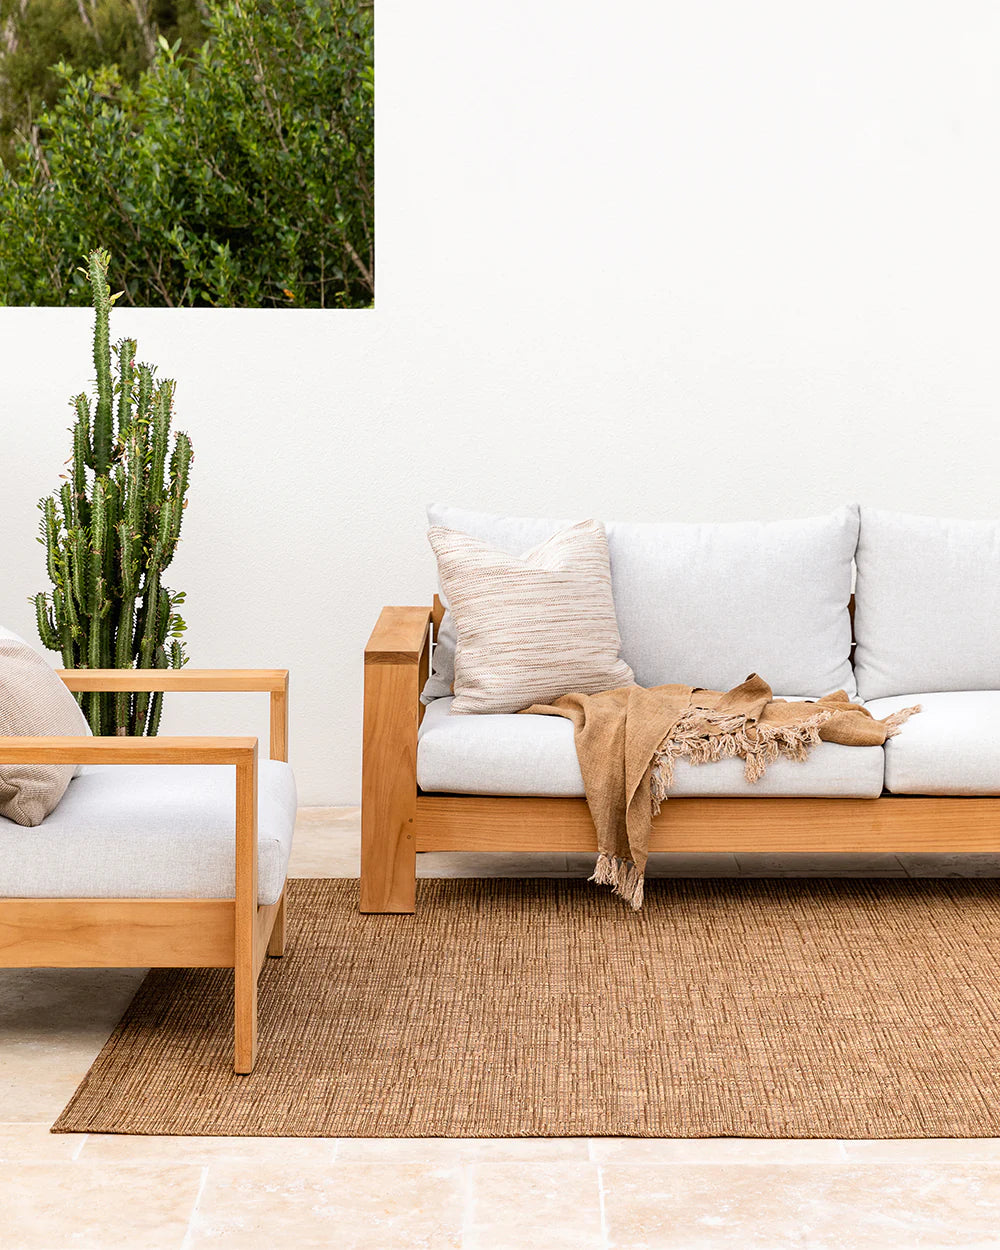 Noumea Teak Outdoor PET Rug from Baya Furtex Stockist Make Your House A Home, Furniture Store Bendigo. Free Australia Wide Delivery.